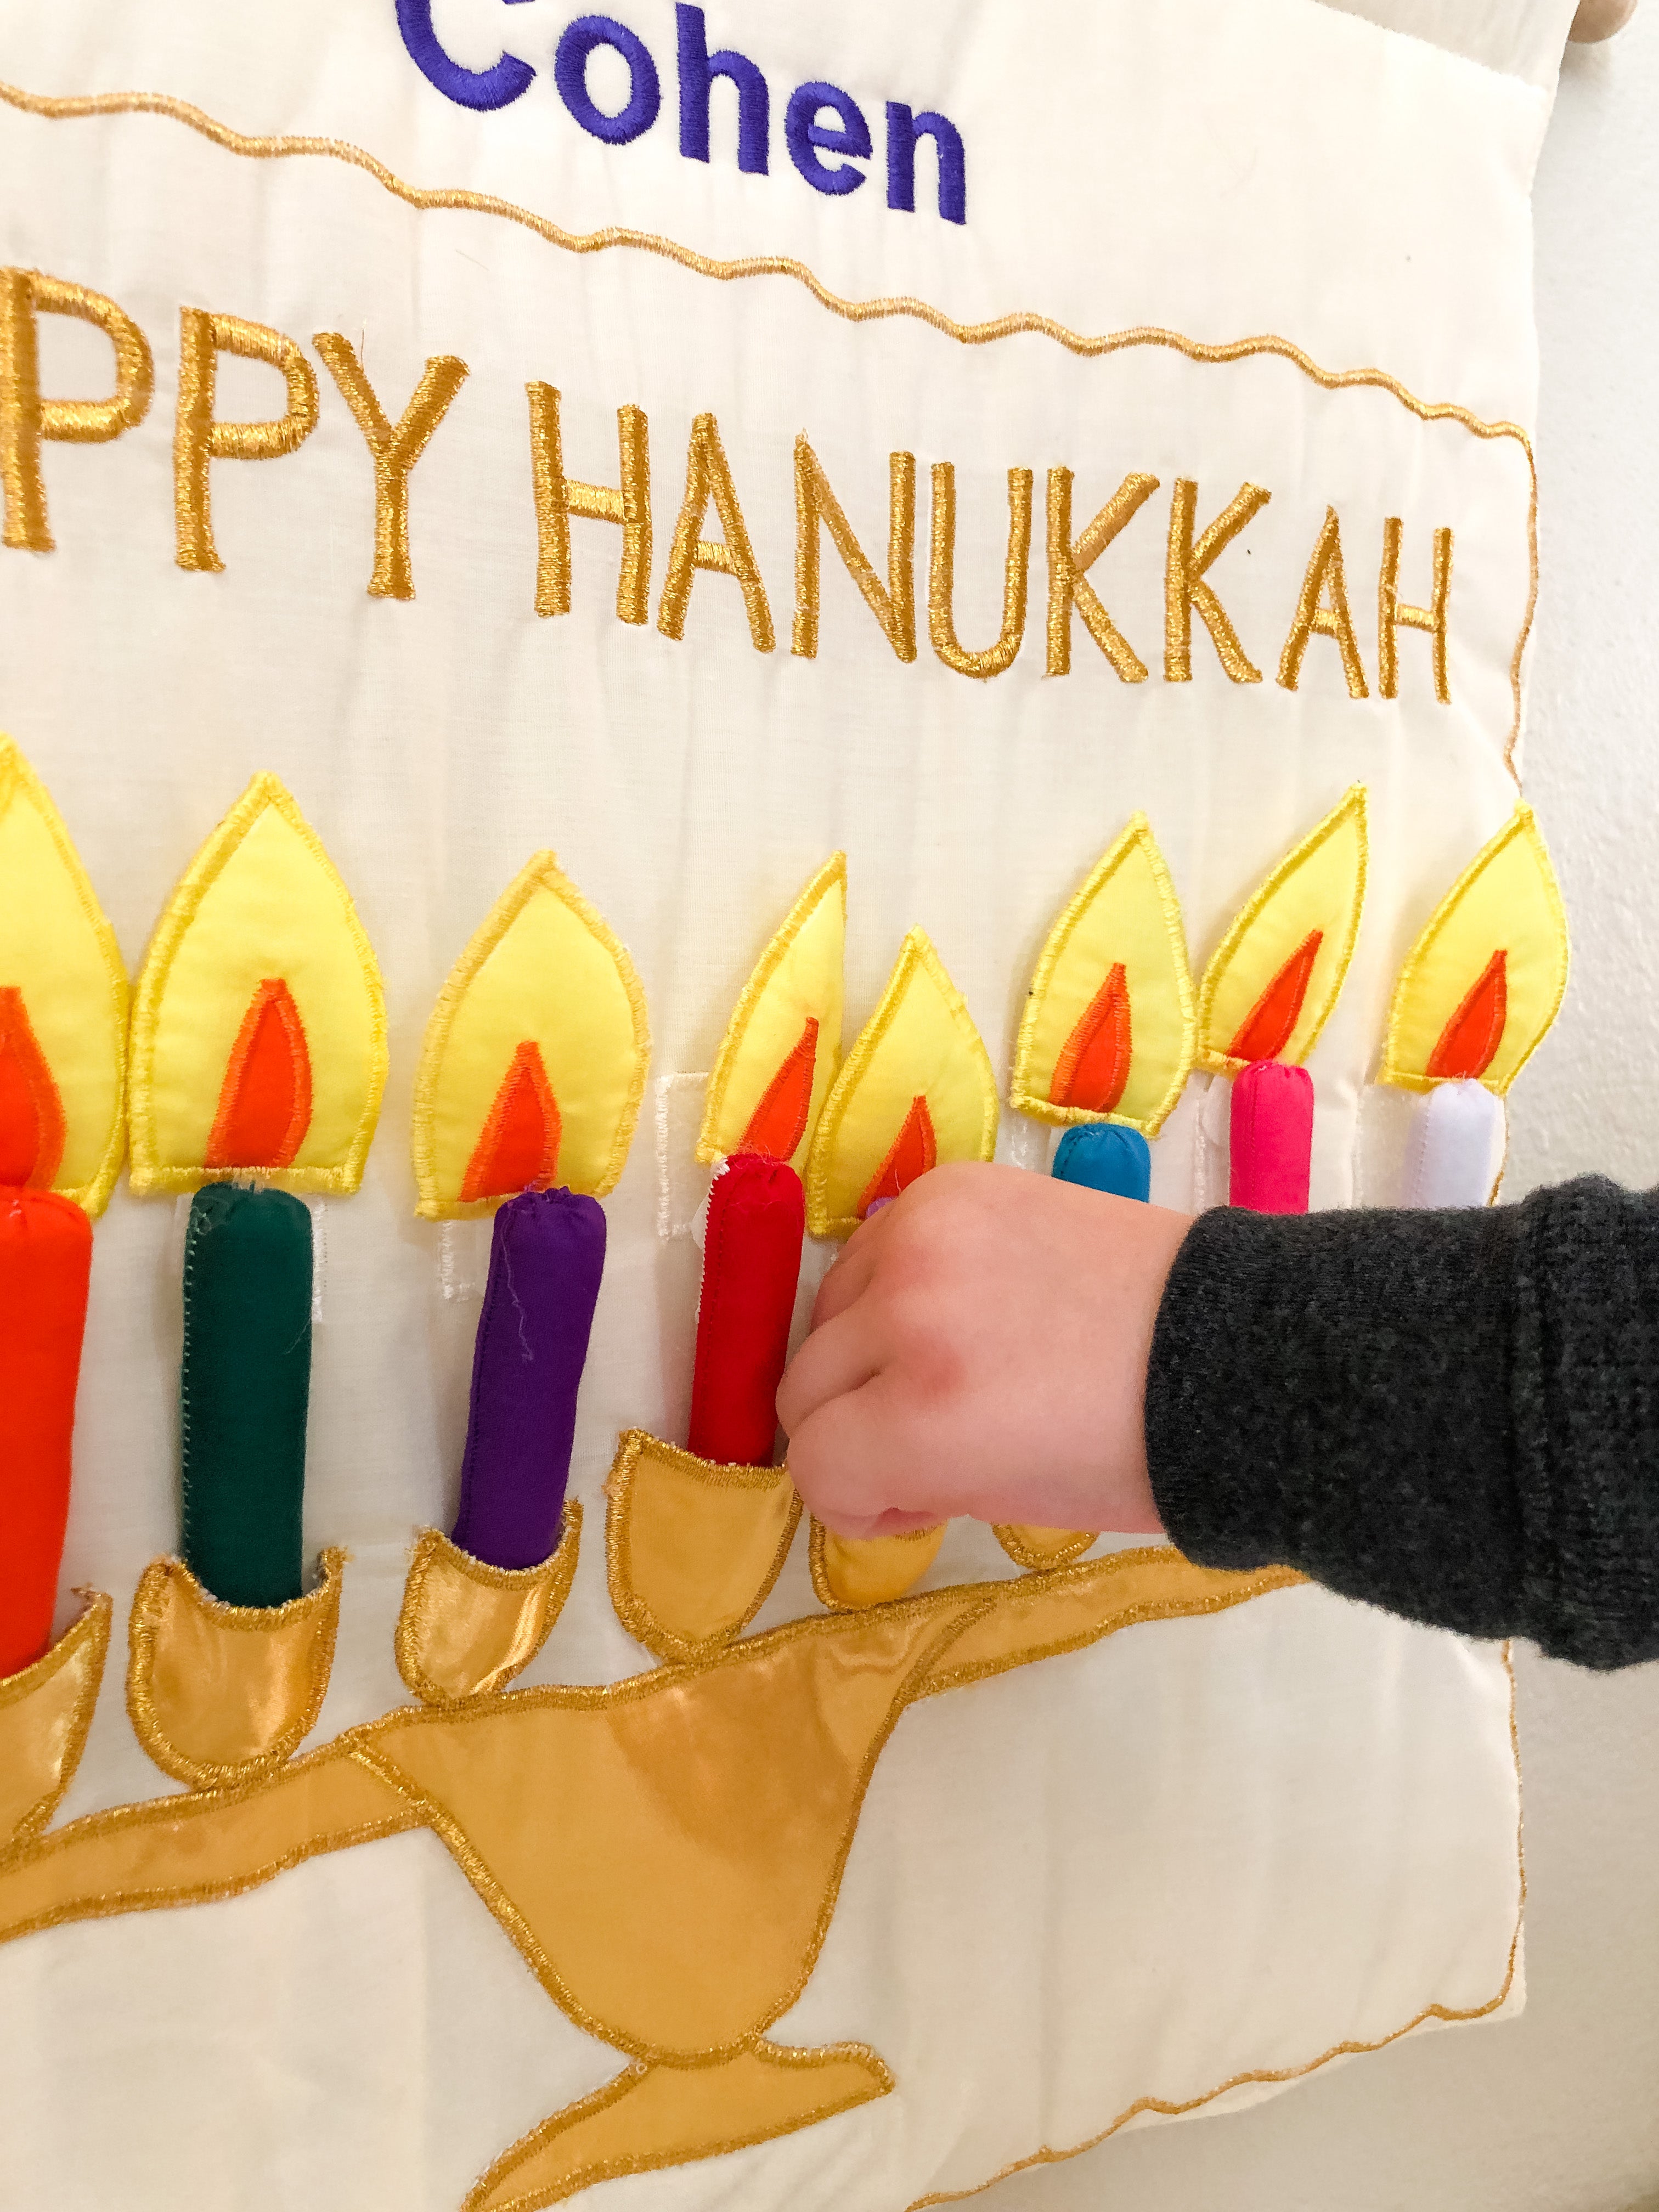 Ivory Happy Hanukkah Menorah Jewish Wall Hanging